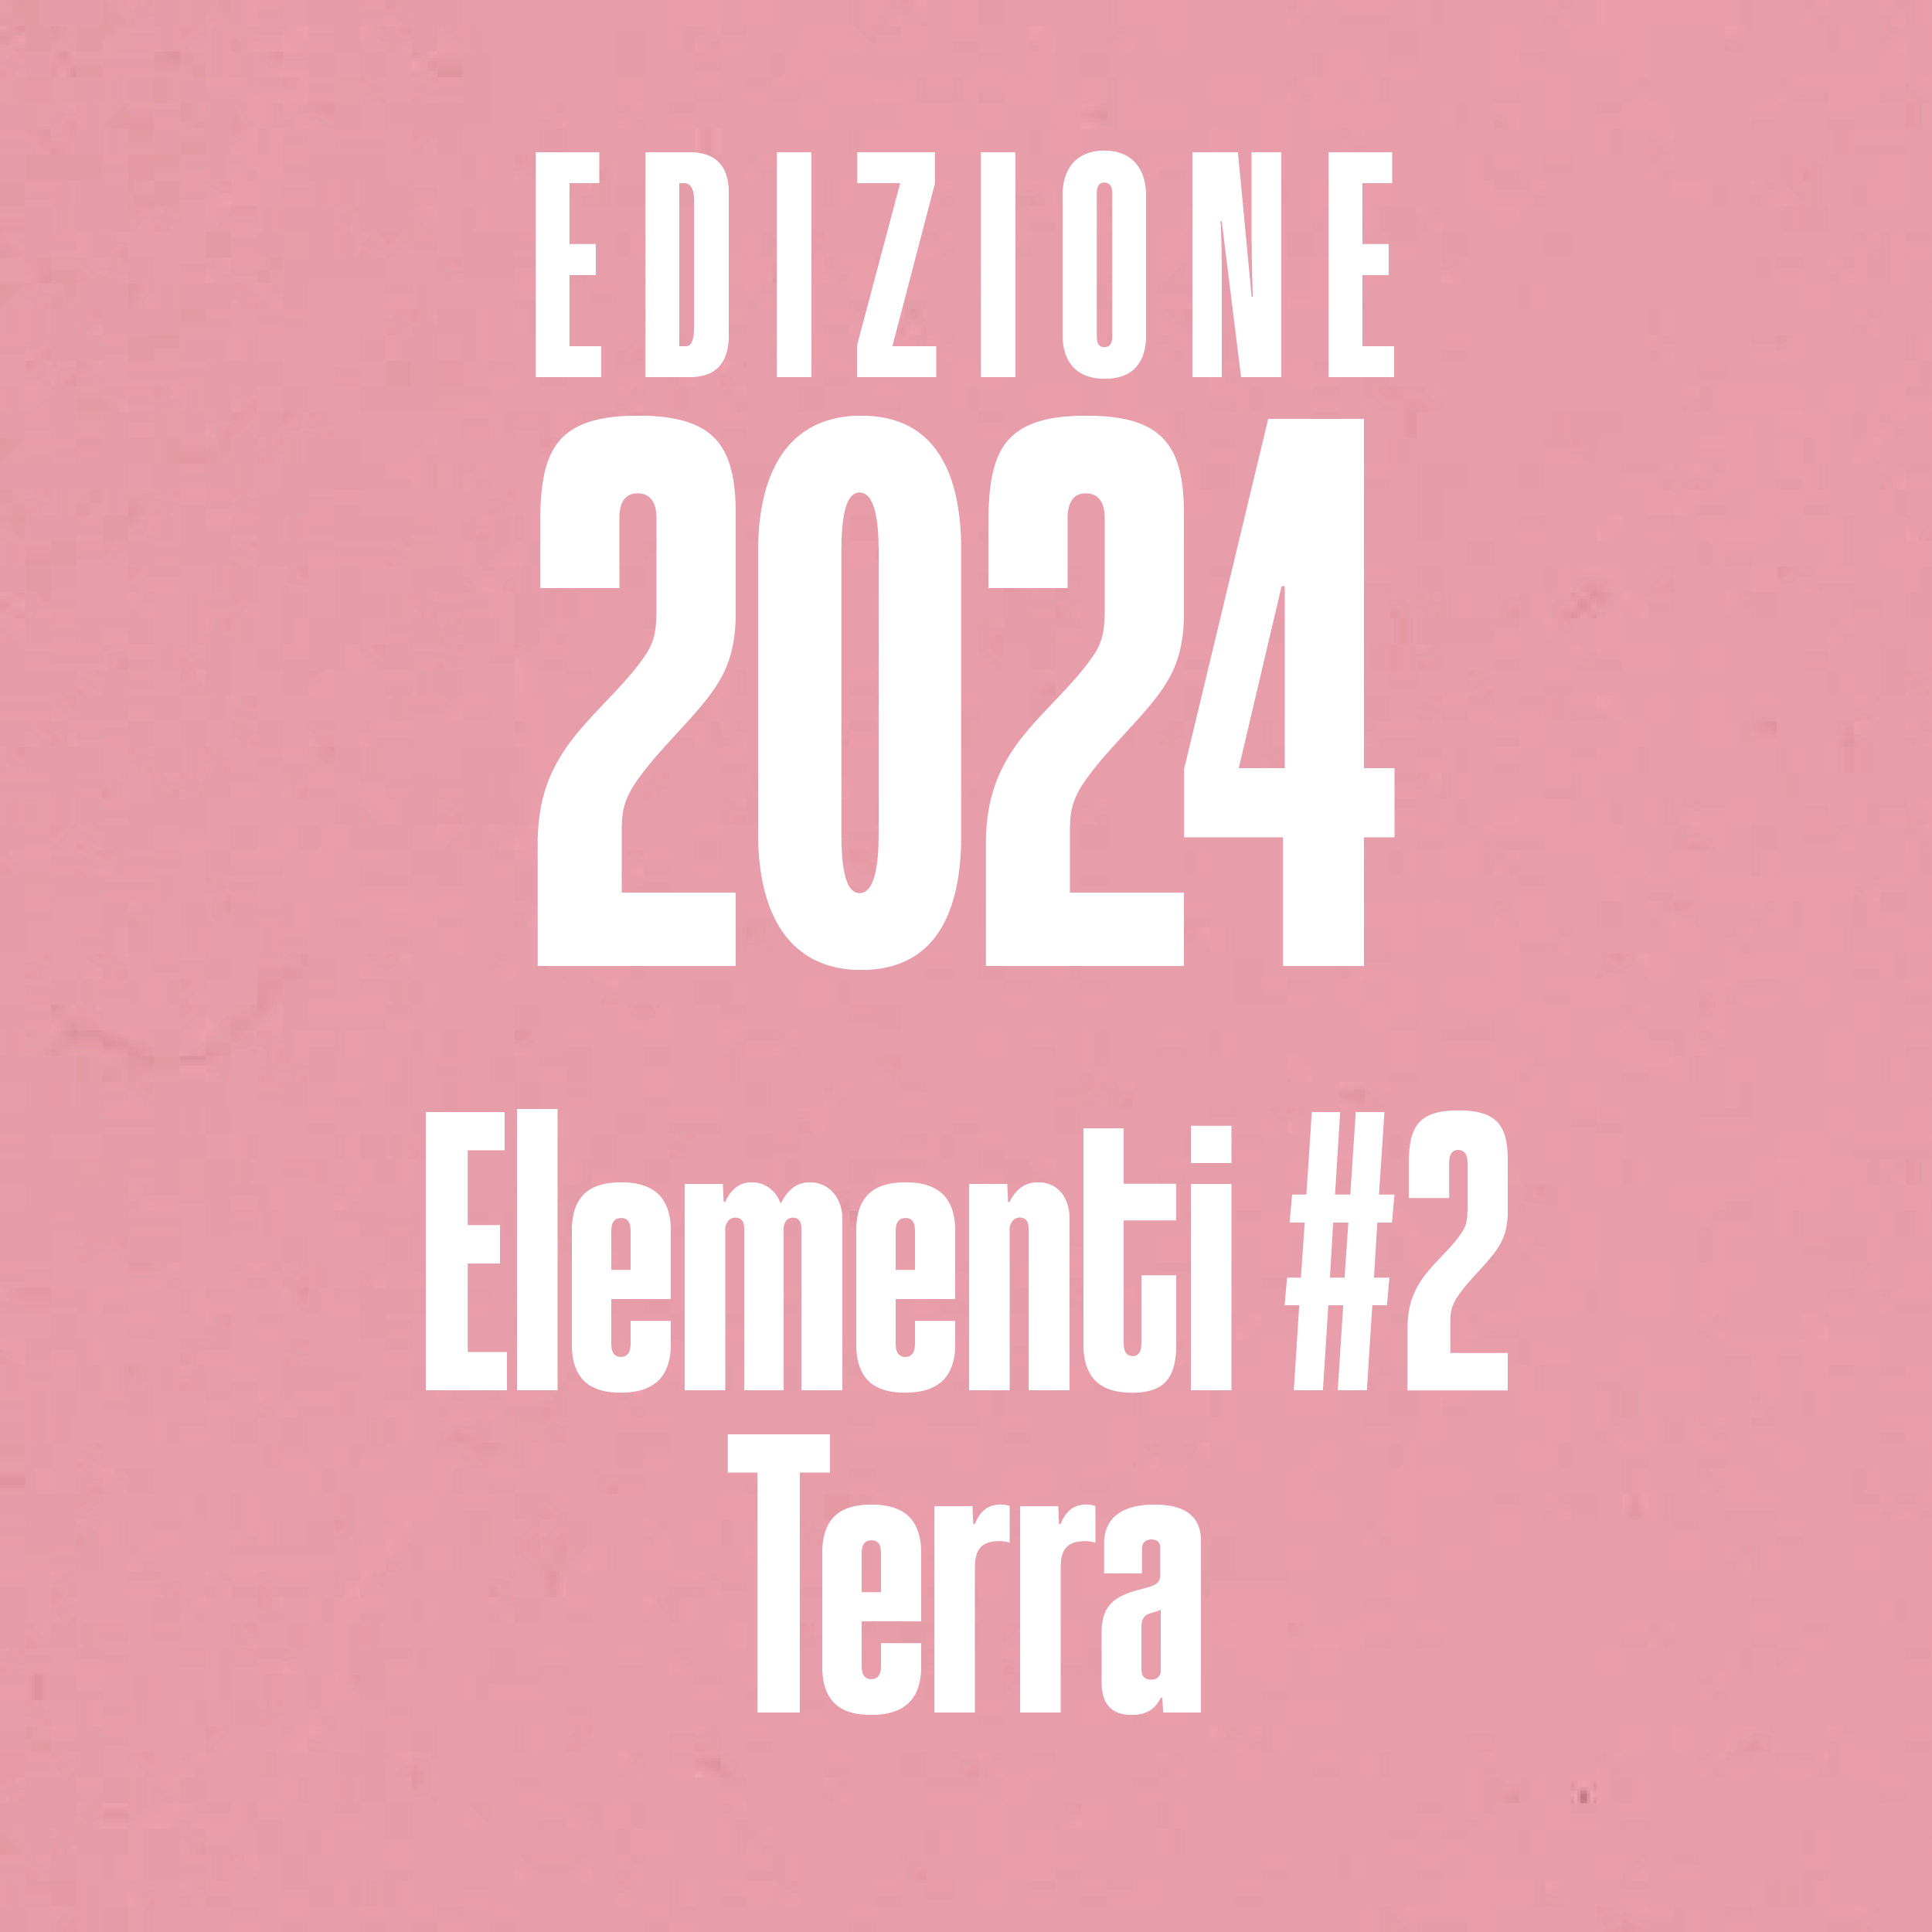 Edizione 2024 Terra Master Environmental Humanties